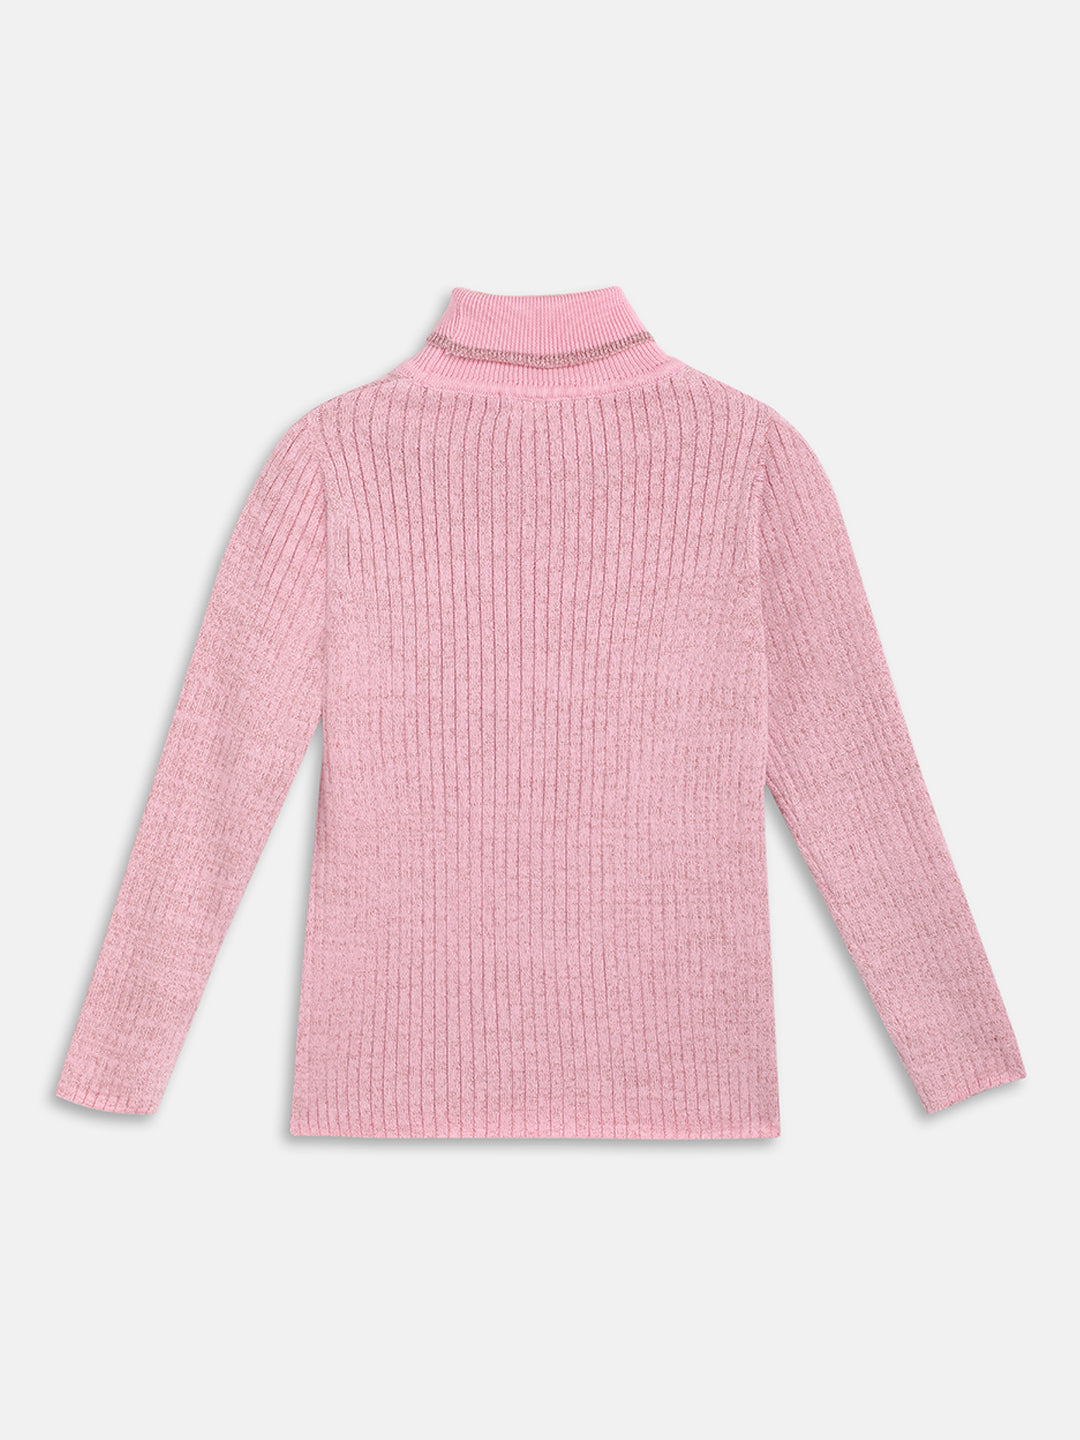 Elle Kids Girls Pink Solid Turtle Neck Sweater